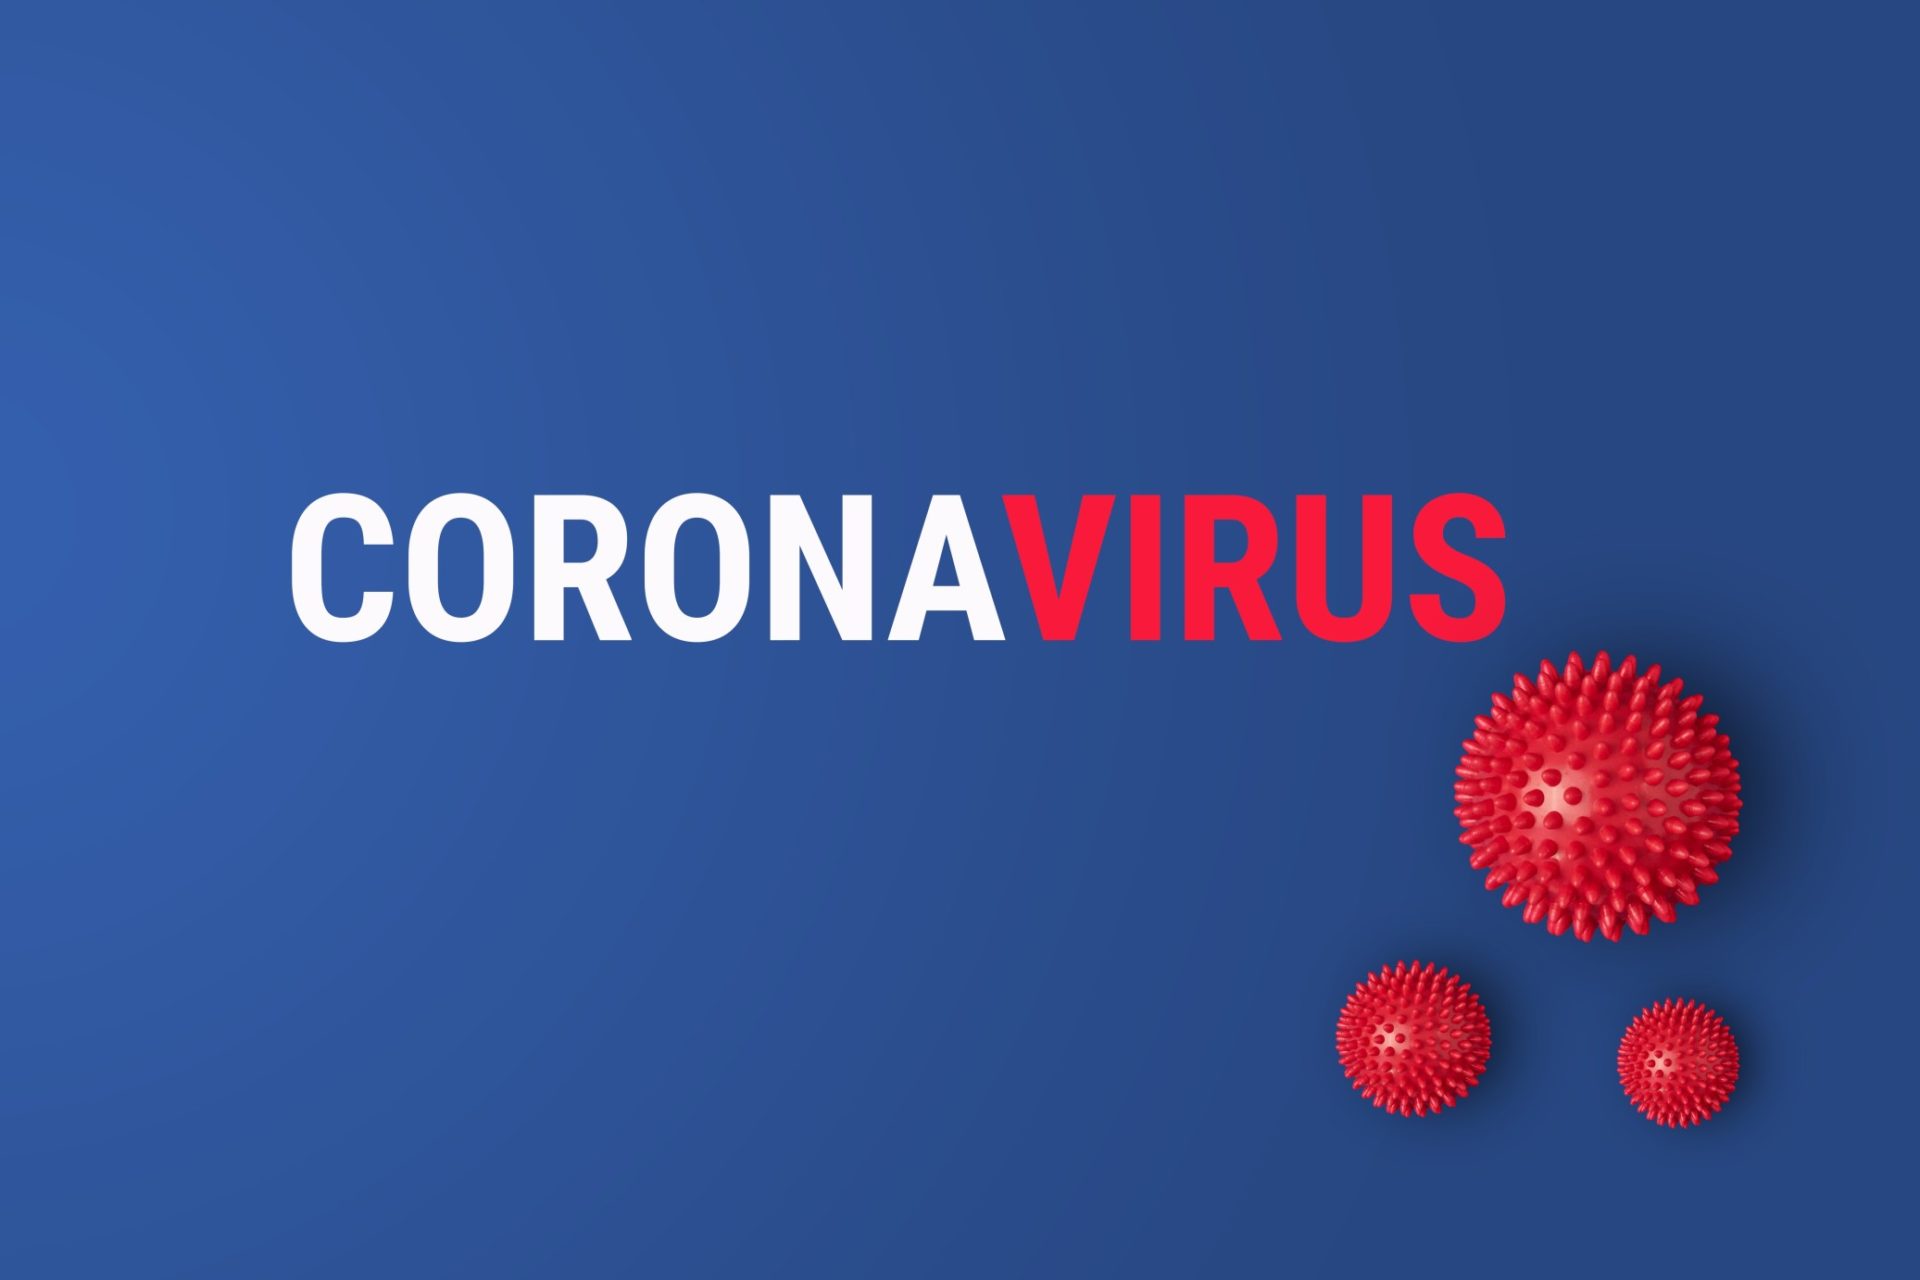 Coronavirus China Wuhan Analysis 2019 Ncov Abstract Attention Bacteria Biohazard Careful Caution T20 3Qr4X9